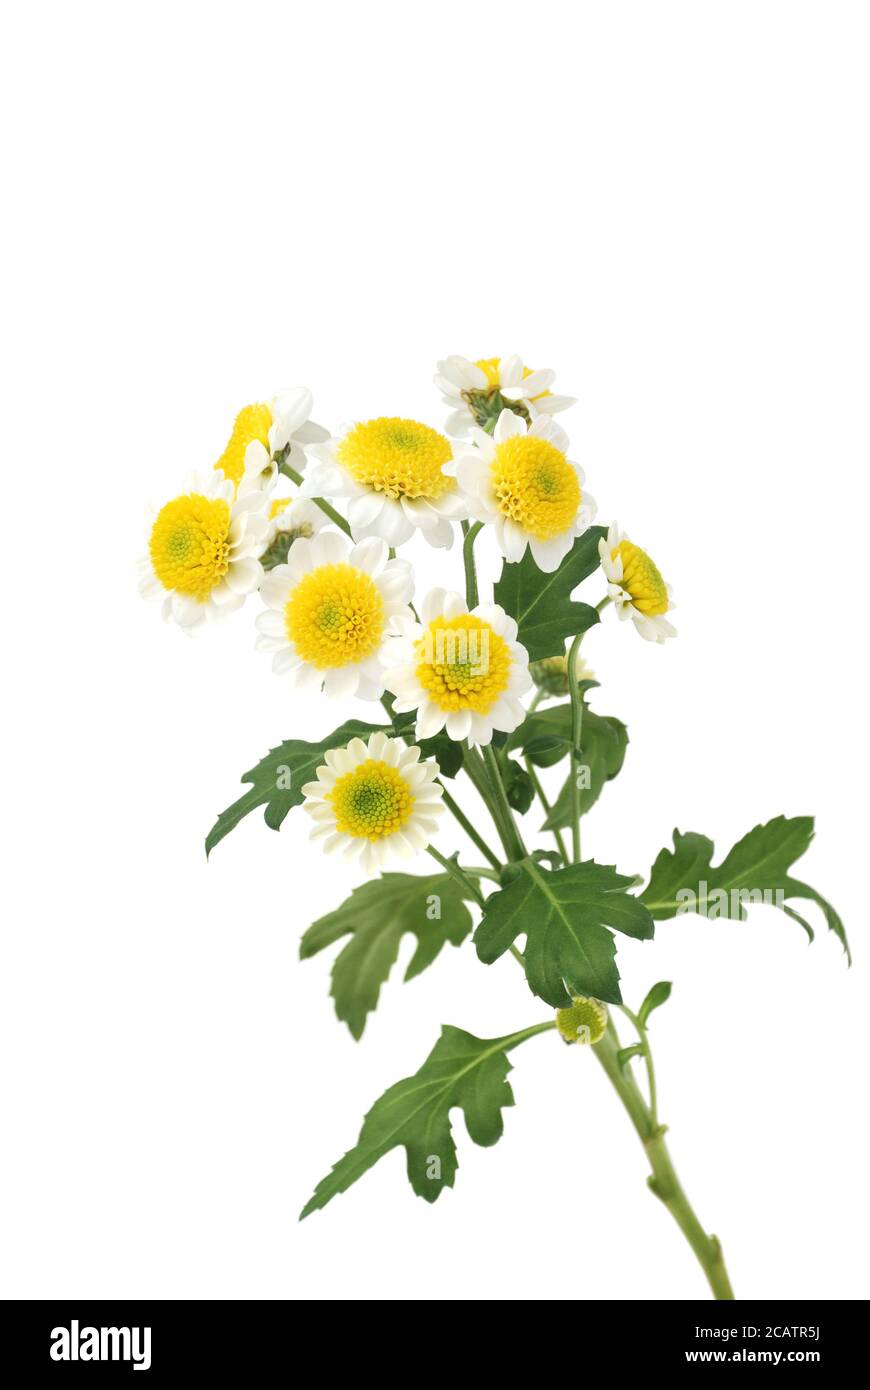 isolated plant against white background Stock Photo